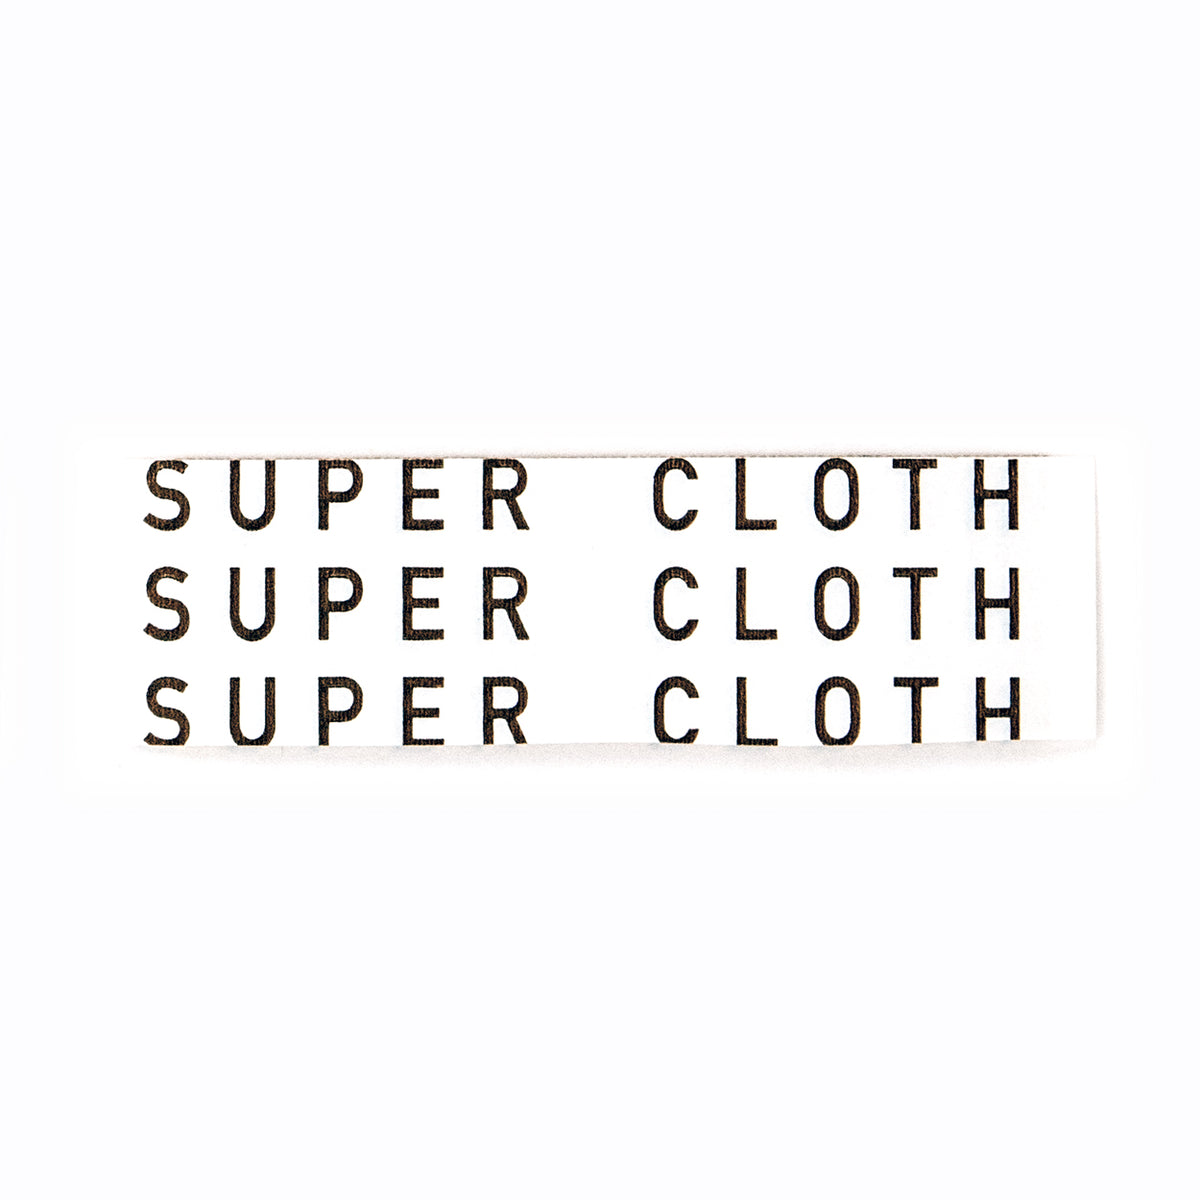 Super Cloth Contours